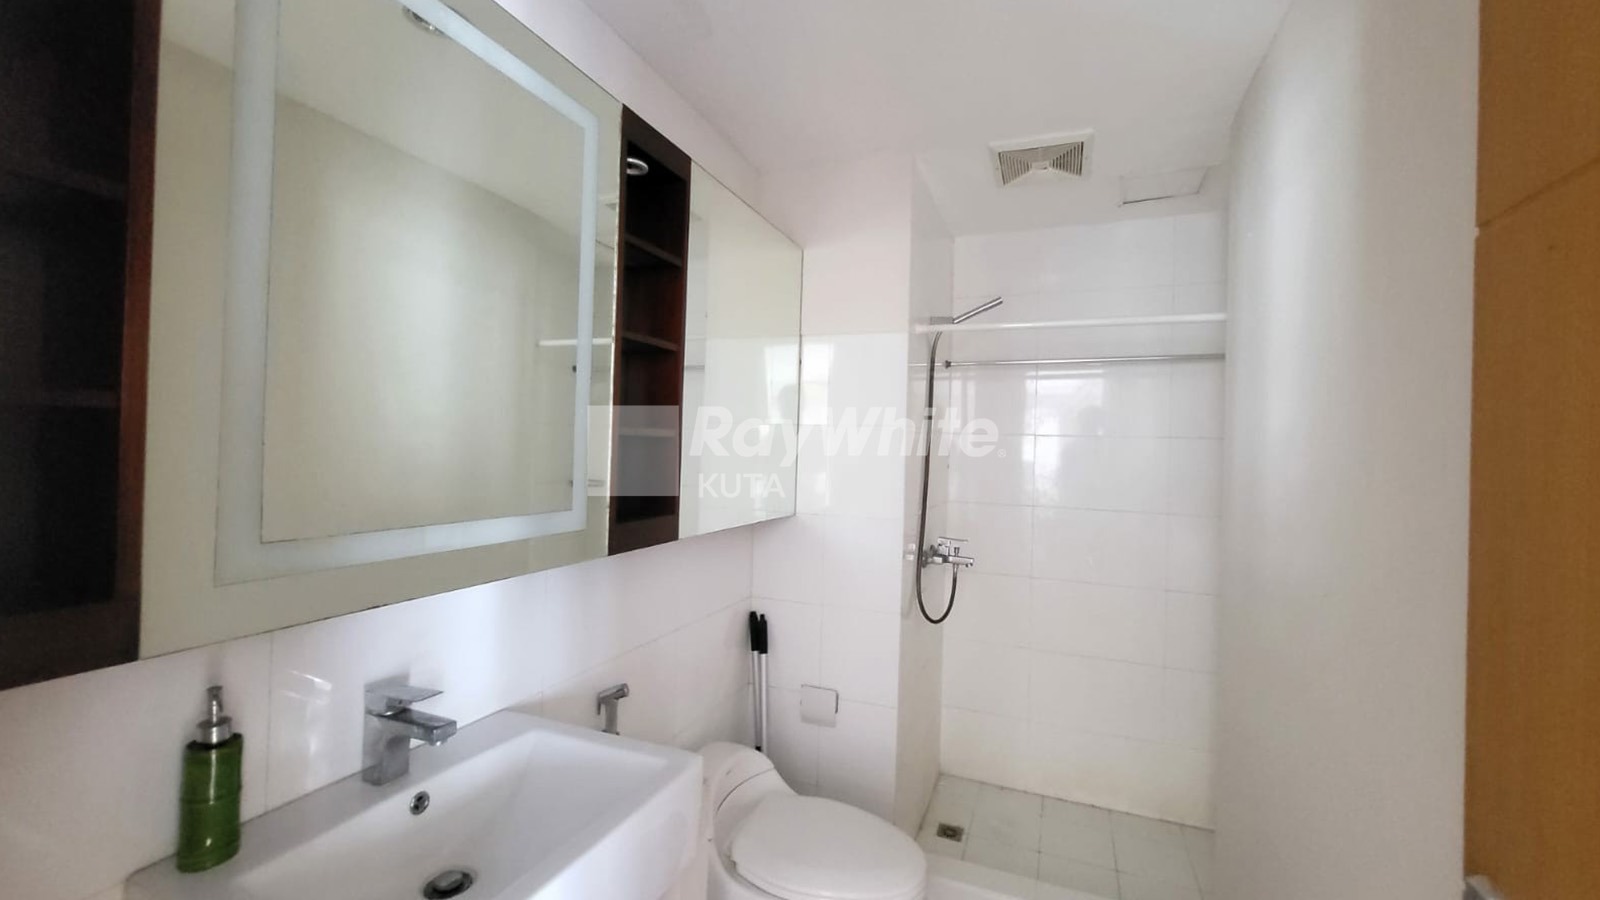 Kuta,Bali,Indonesia,1 Bedroom,1 Bathroom,Apartment,MLS ID 1567